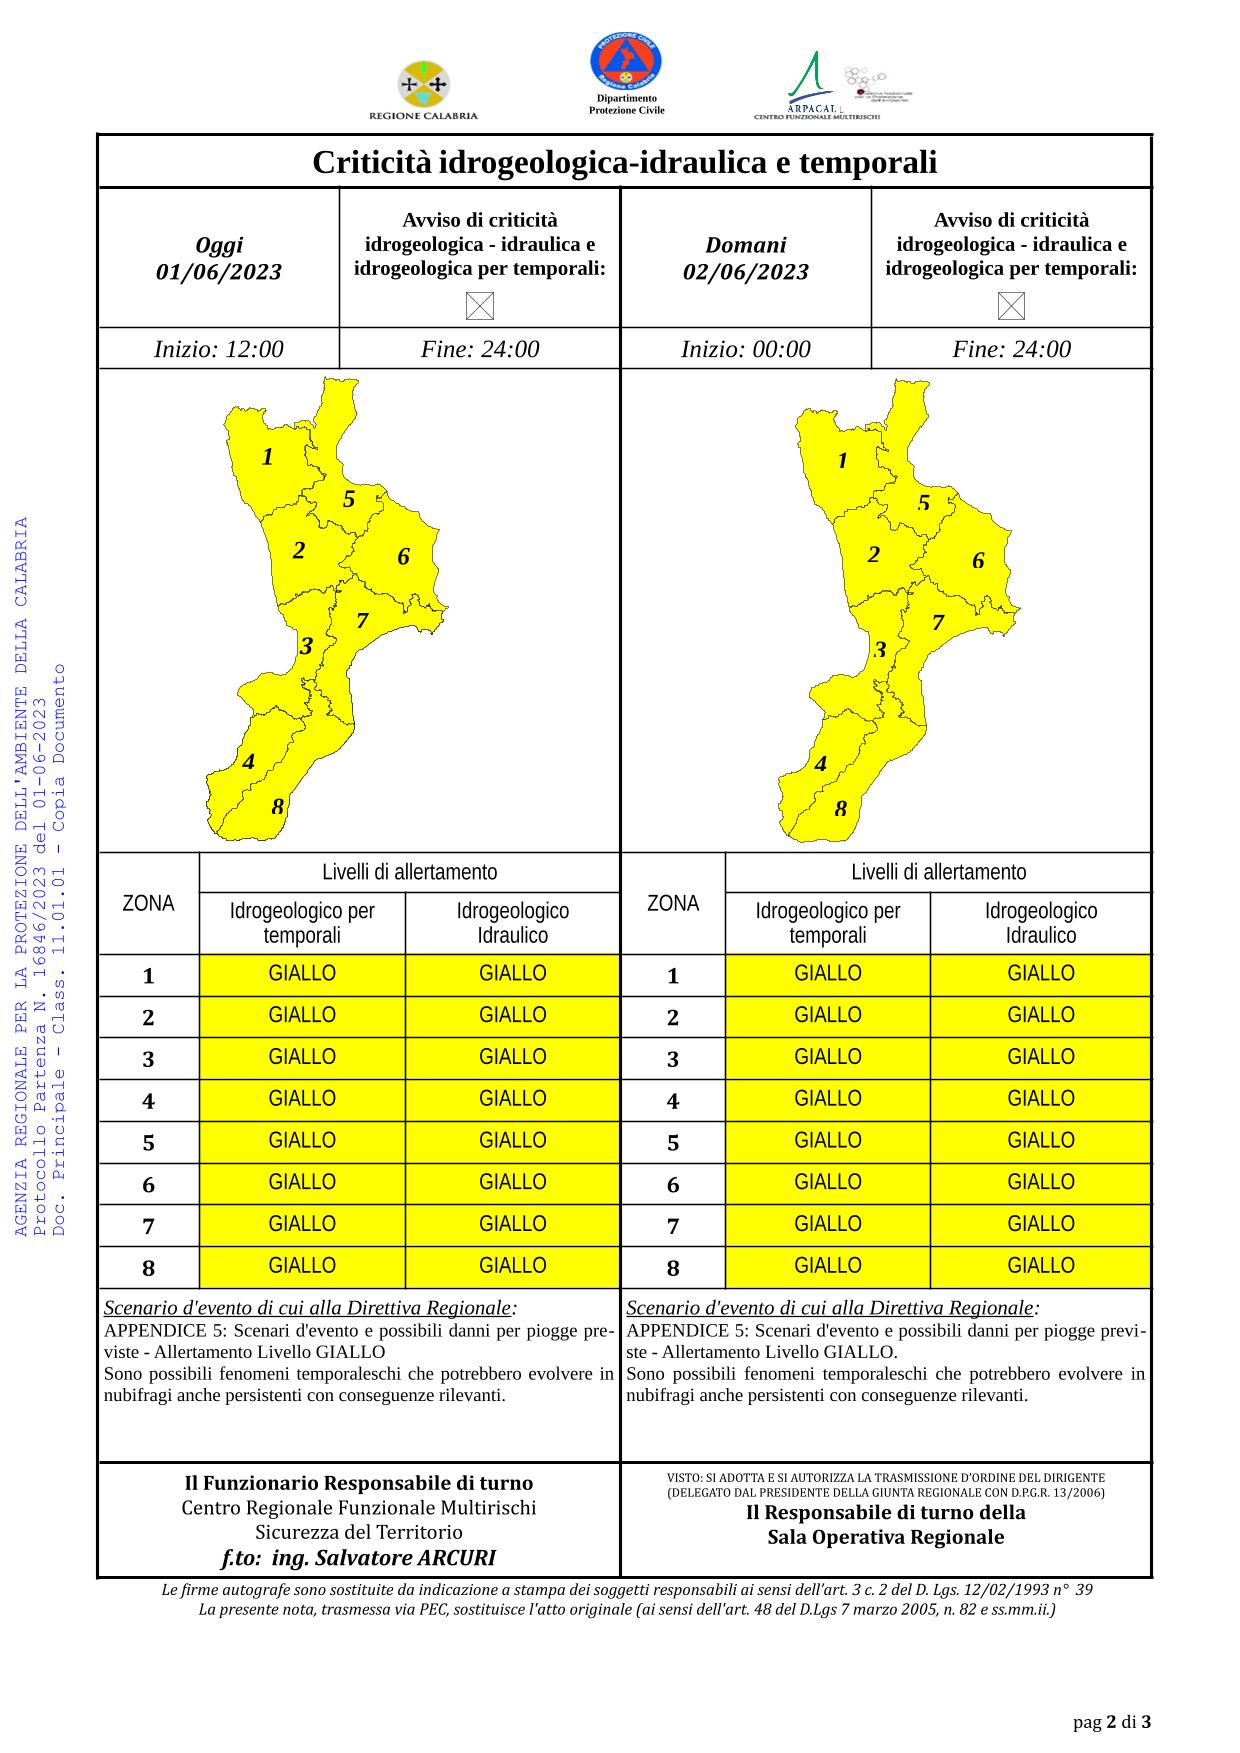 Criticità idrogeologica-idraulica e temporali in Calabria 01-06-2023